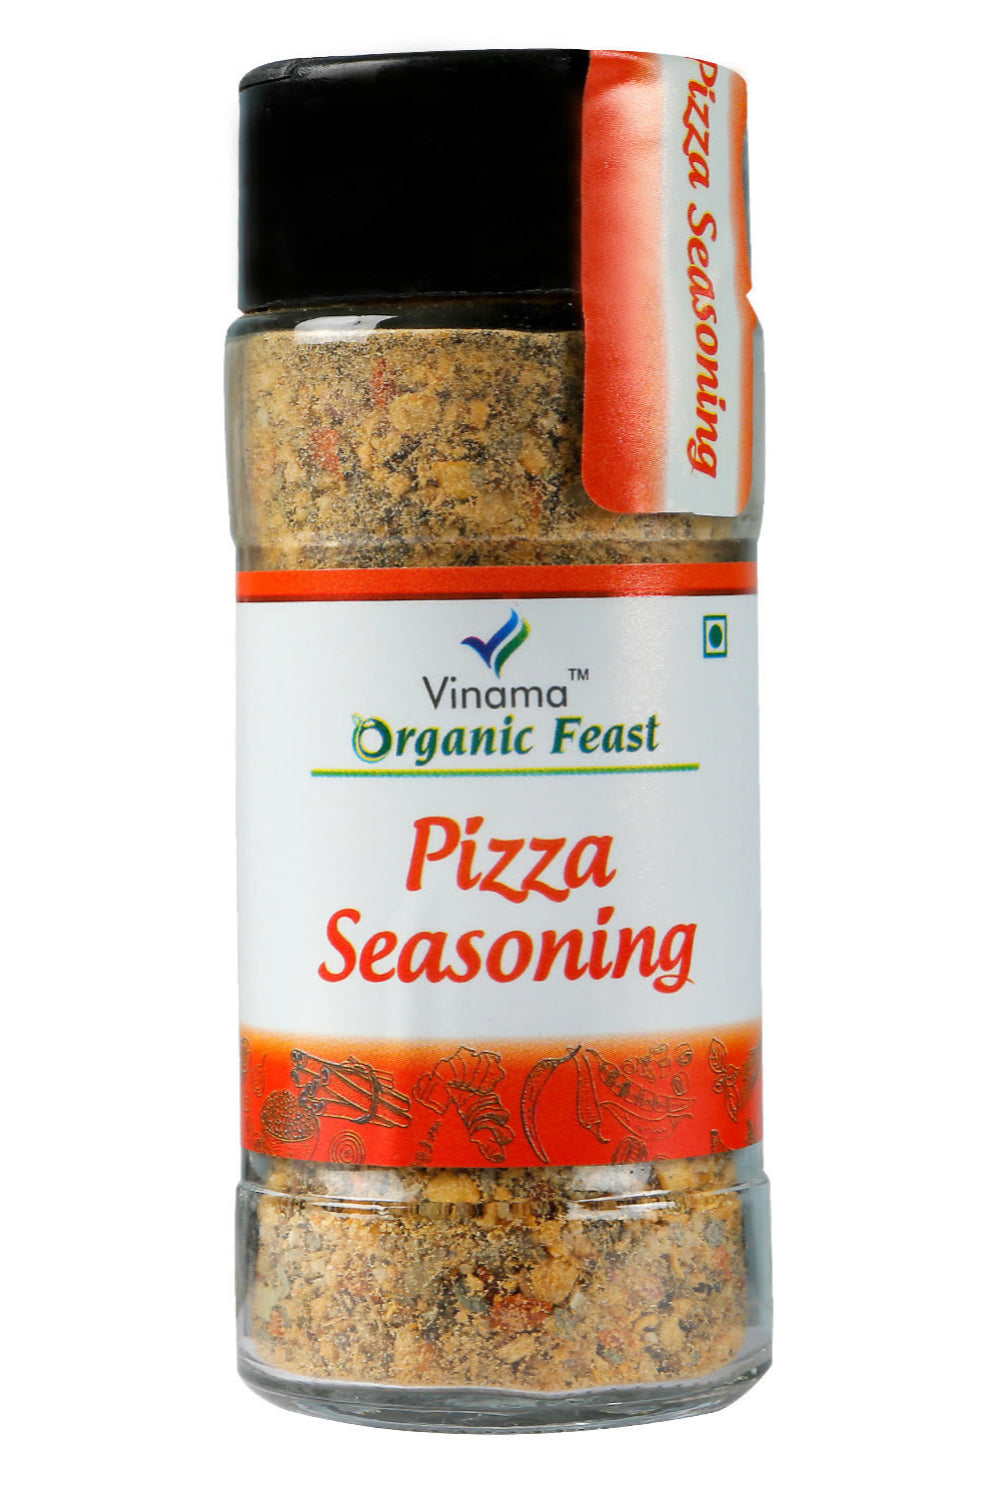 Vinama Organic Feast Chef's Special Combo | All Purpose Seasoning x 1, 60g | Pizza Seasoning x 1, 50g | Pack of 2 | Glass Bottle